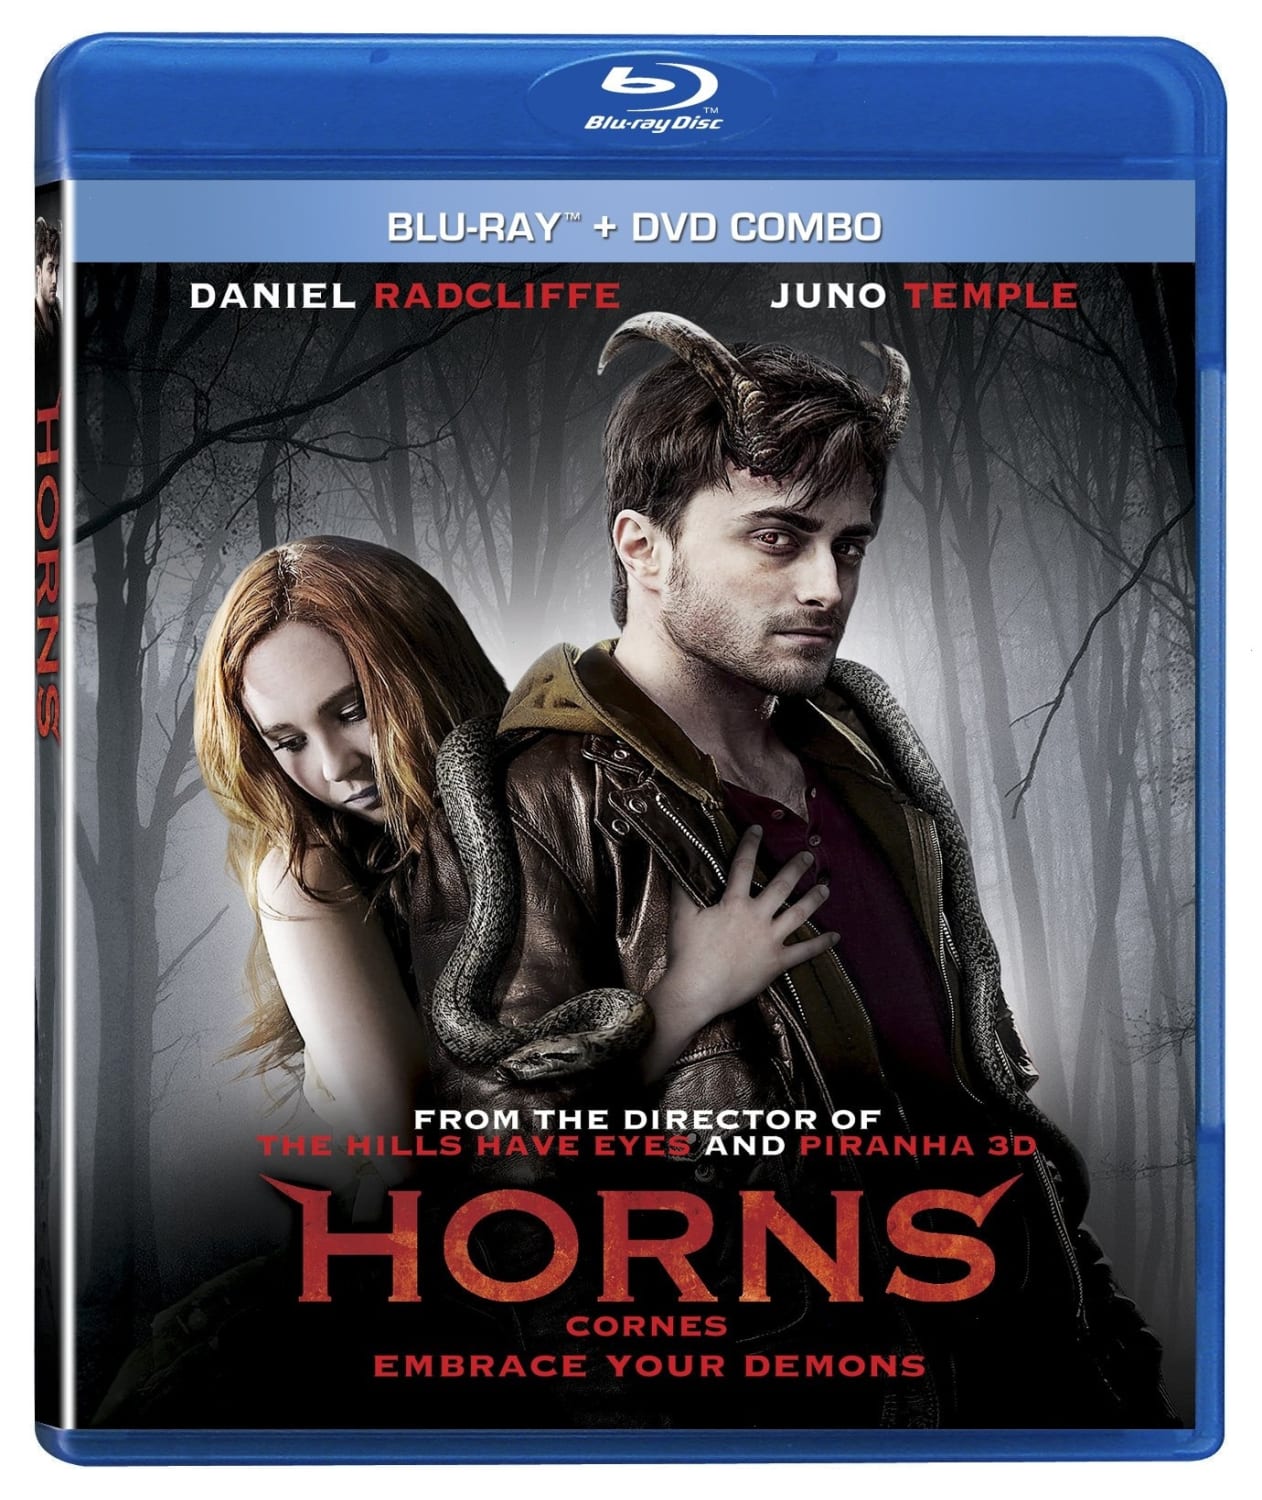 Horns (Blu-ray / DVD) on MovieShack